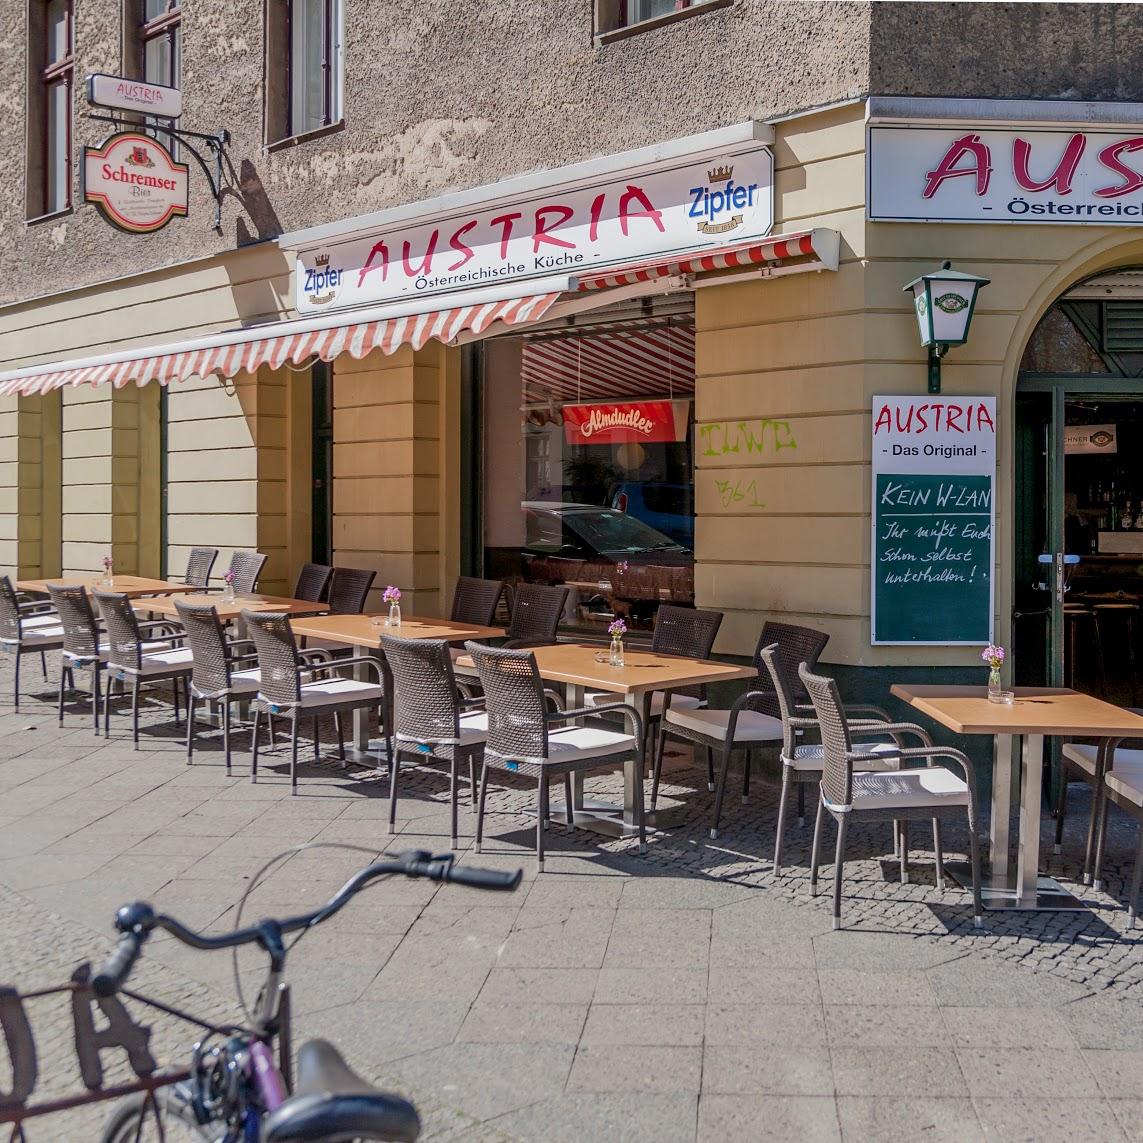 Restaurant "Austria" in  Berlin